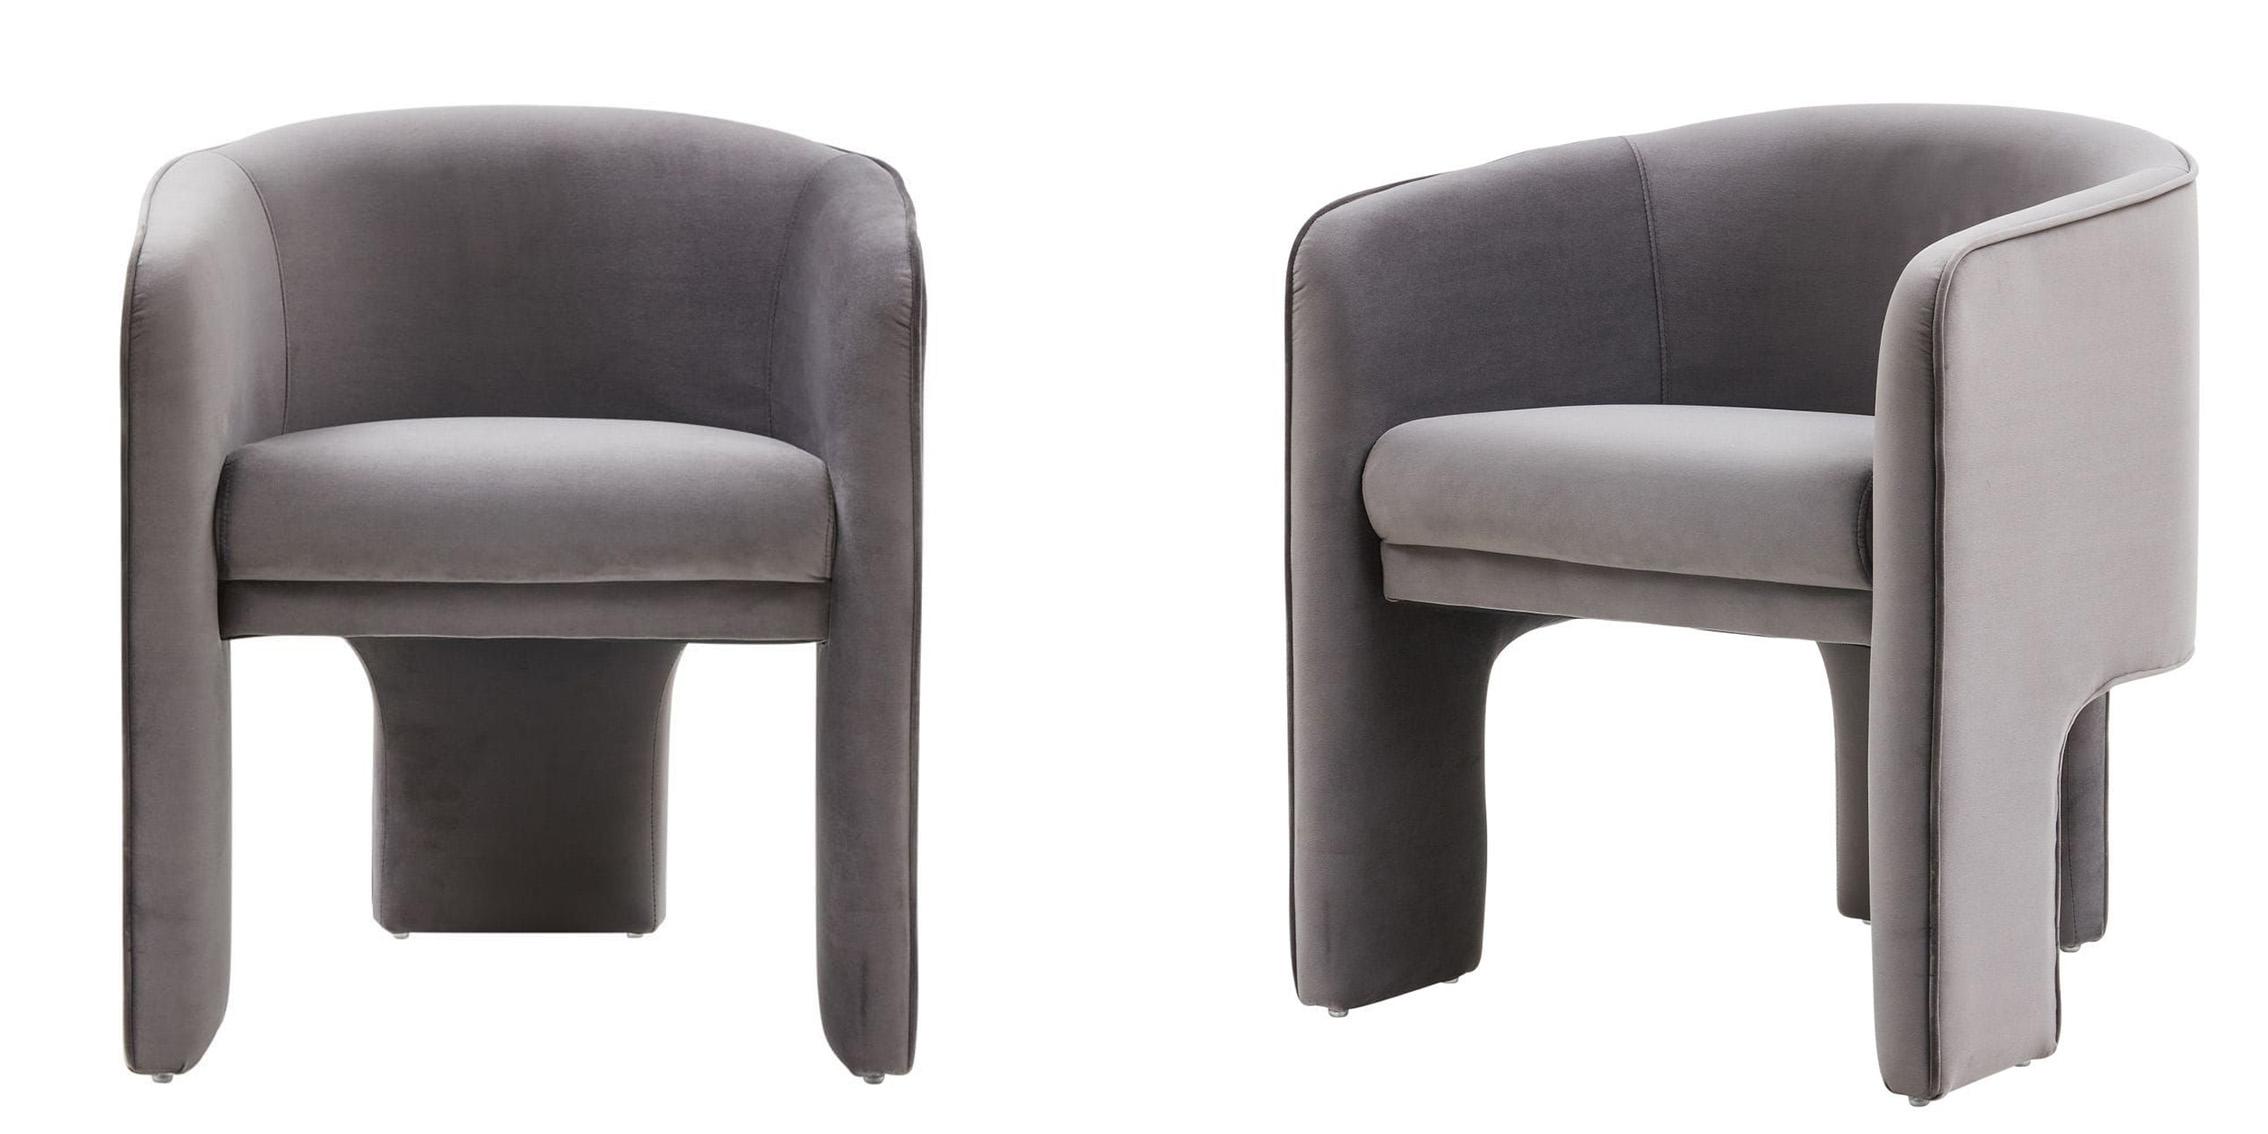 Contemporary, Modern Arm Chair Set VGRHAC-235-GRY-CH-Set-2 VGRHAC-235-GRY-CH-Set-2 in Dark Grey Fabric